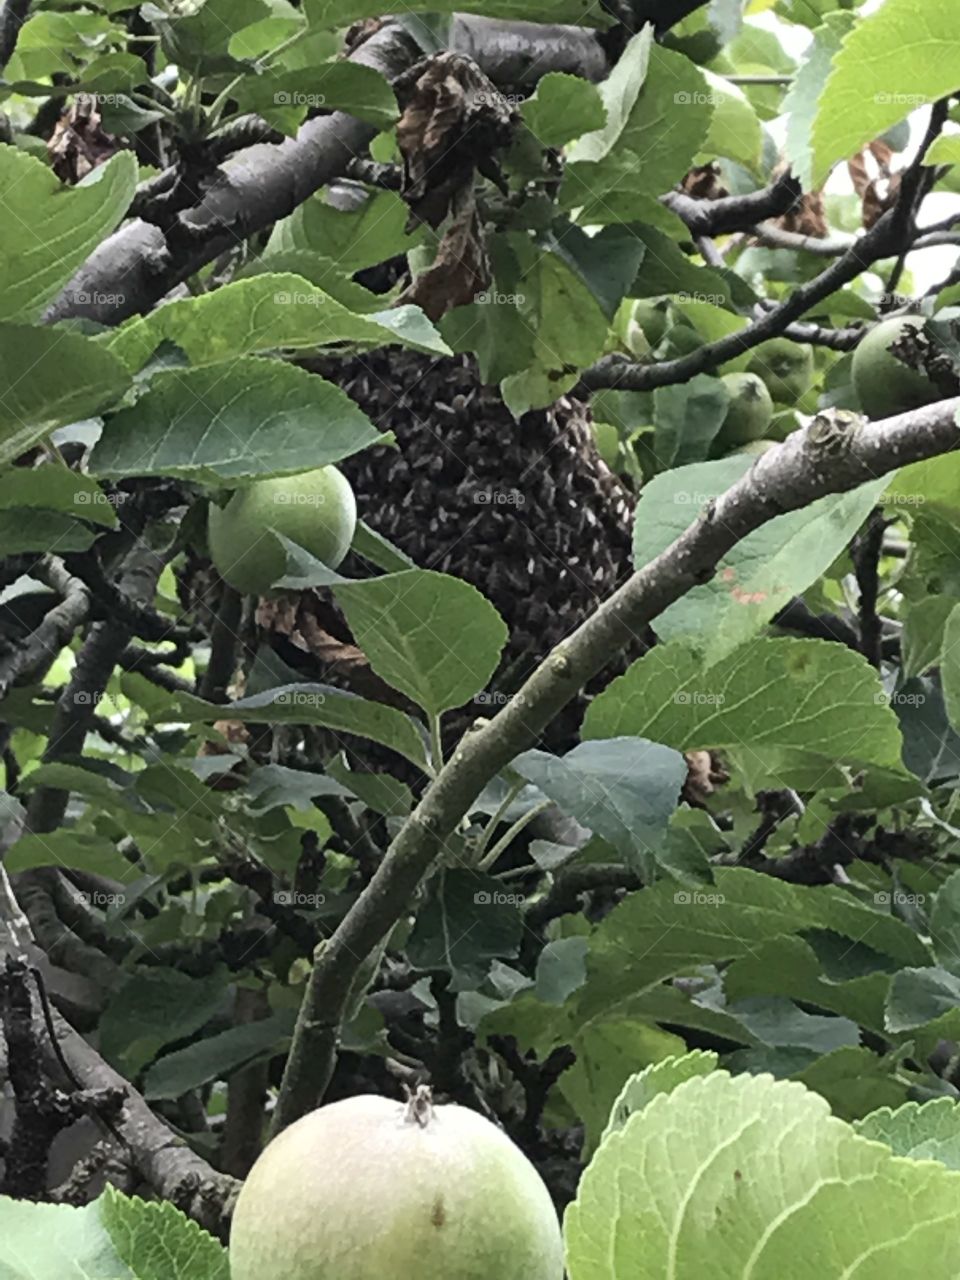 Bees swarm in apple tree